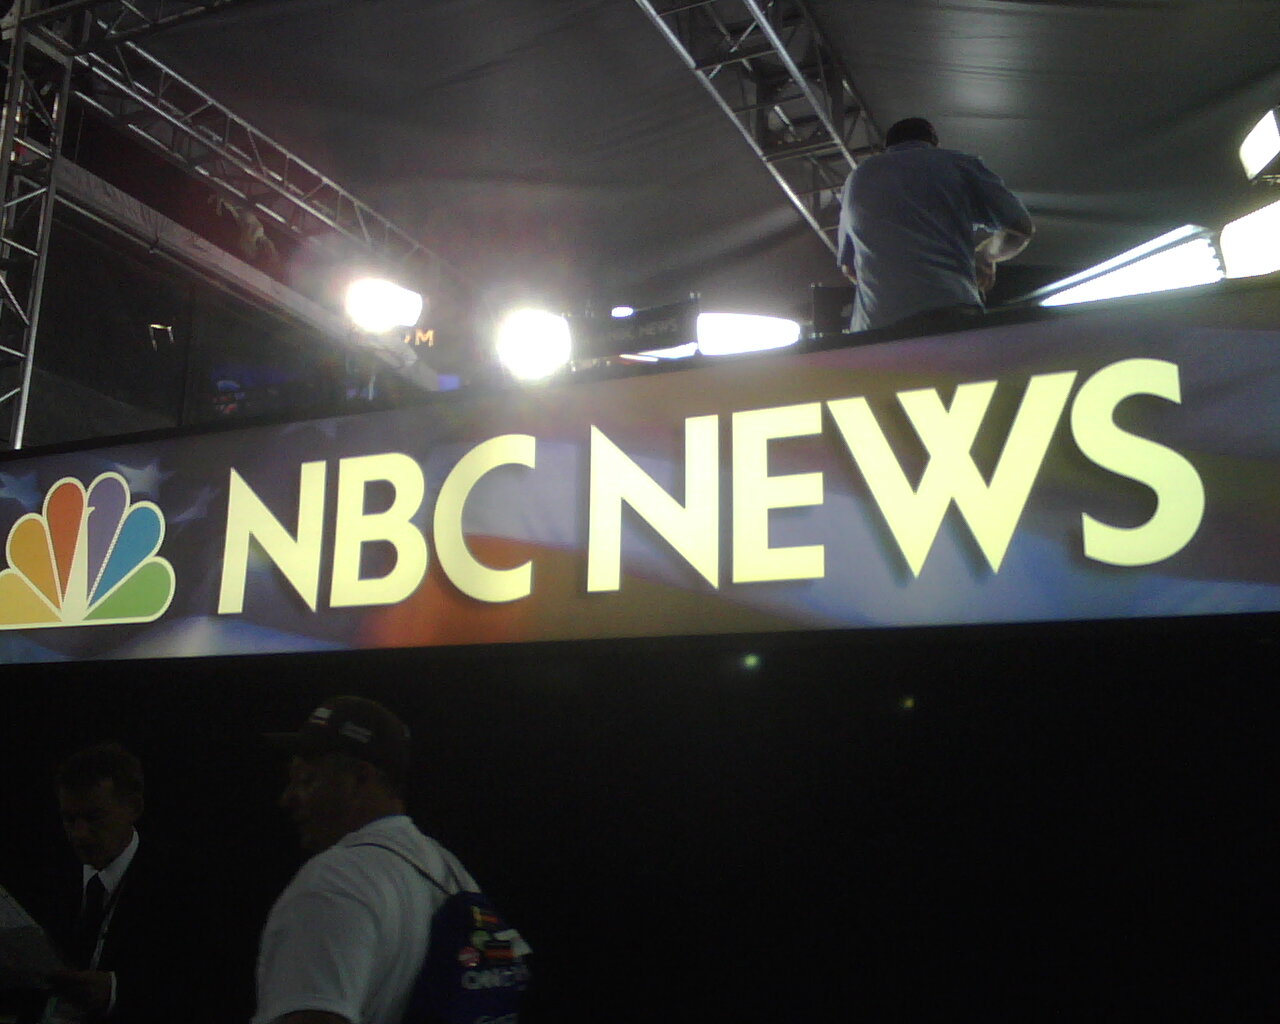 Image: NBC News totally exposed as a lying FAKE NEWS propaganda network desperately trying to destroy Brett Kavanaugh